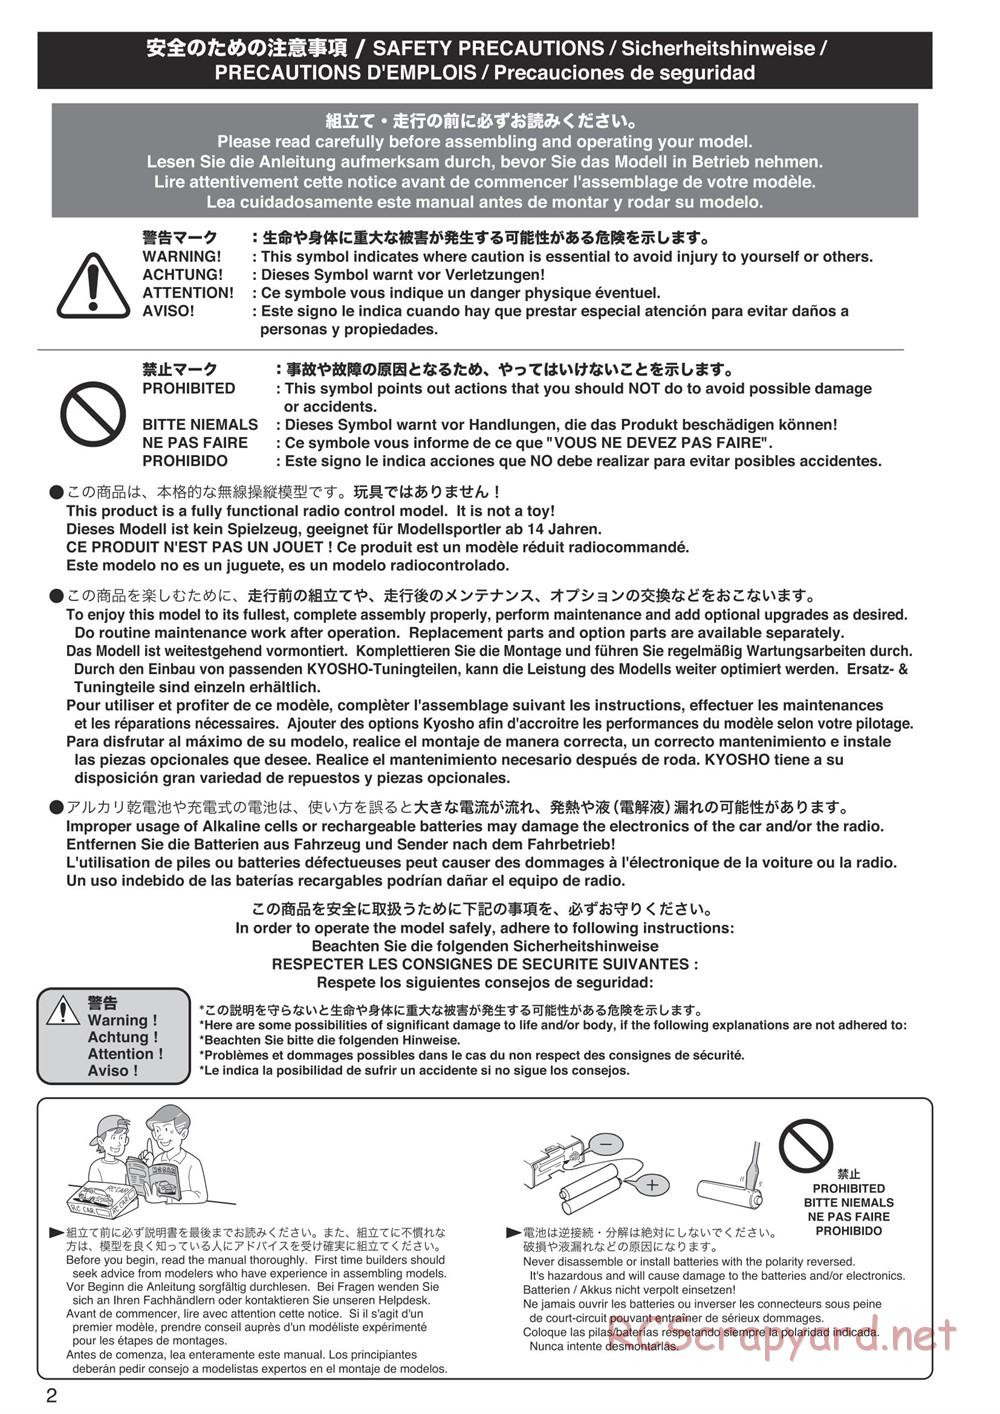 Kyosho - Ultima-SC - Manual - Page 2